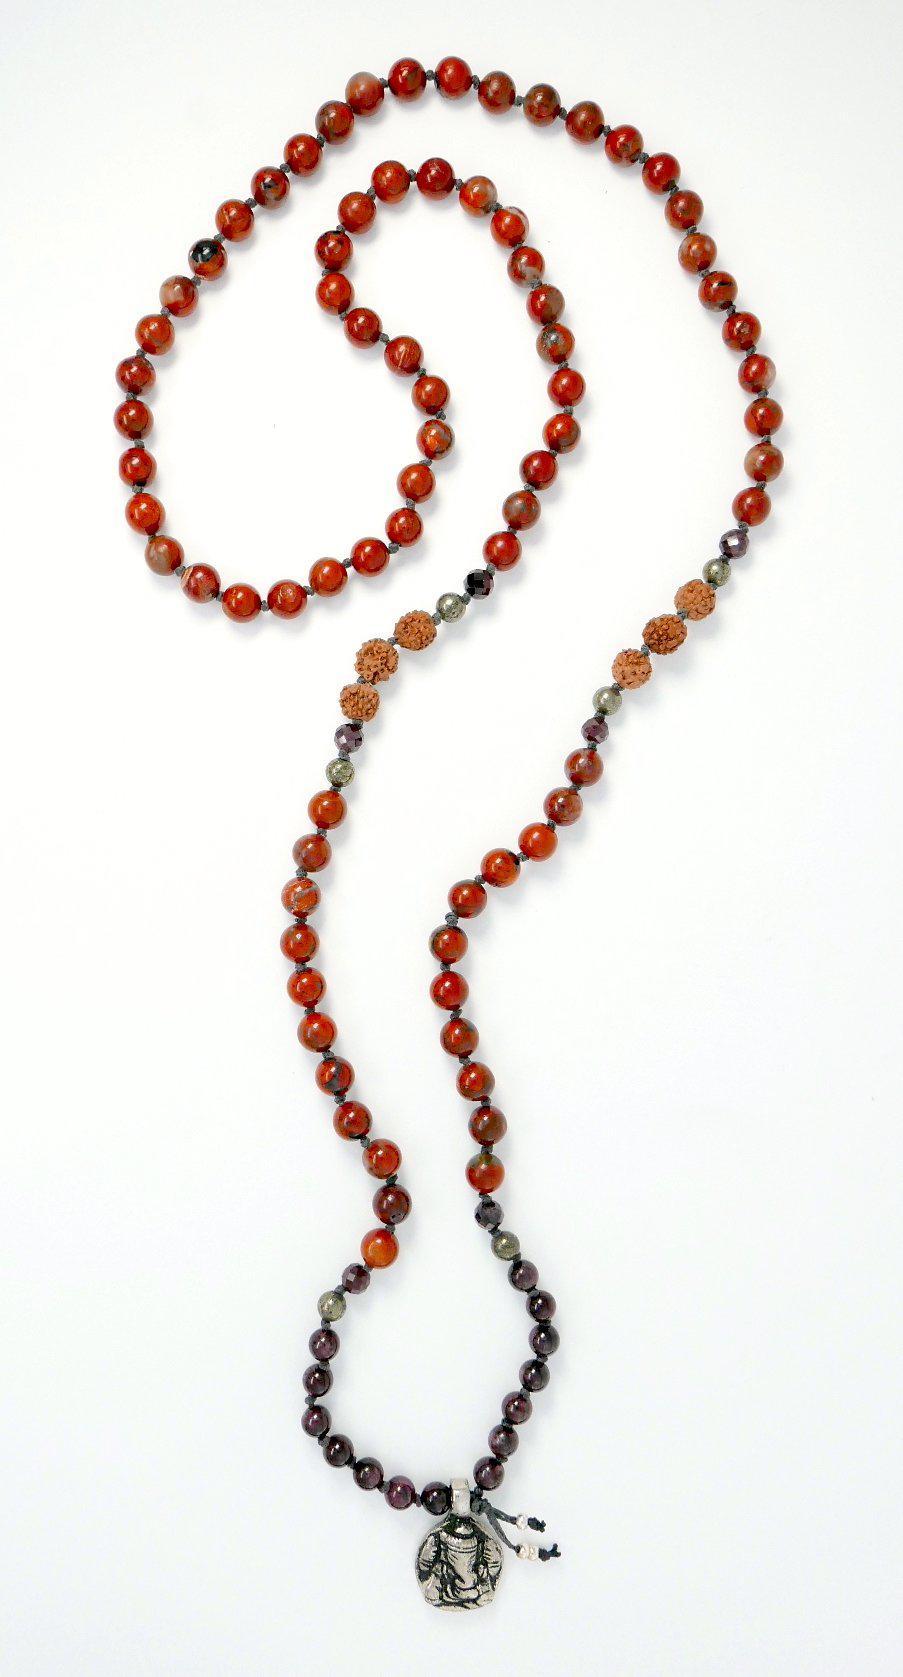 Completed mala necklace with Ganesh guru bead for strength and vitality - MeraKalpa Malas